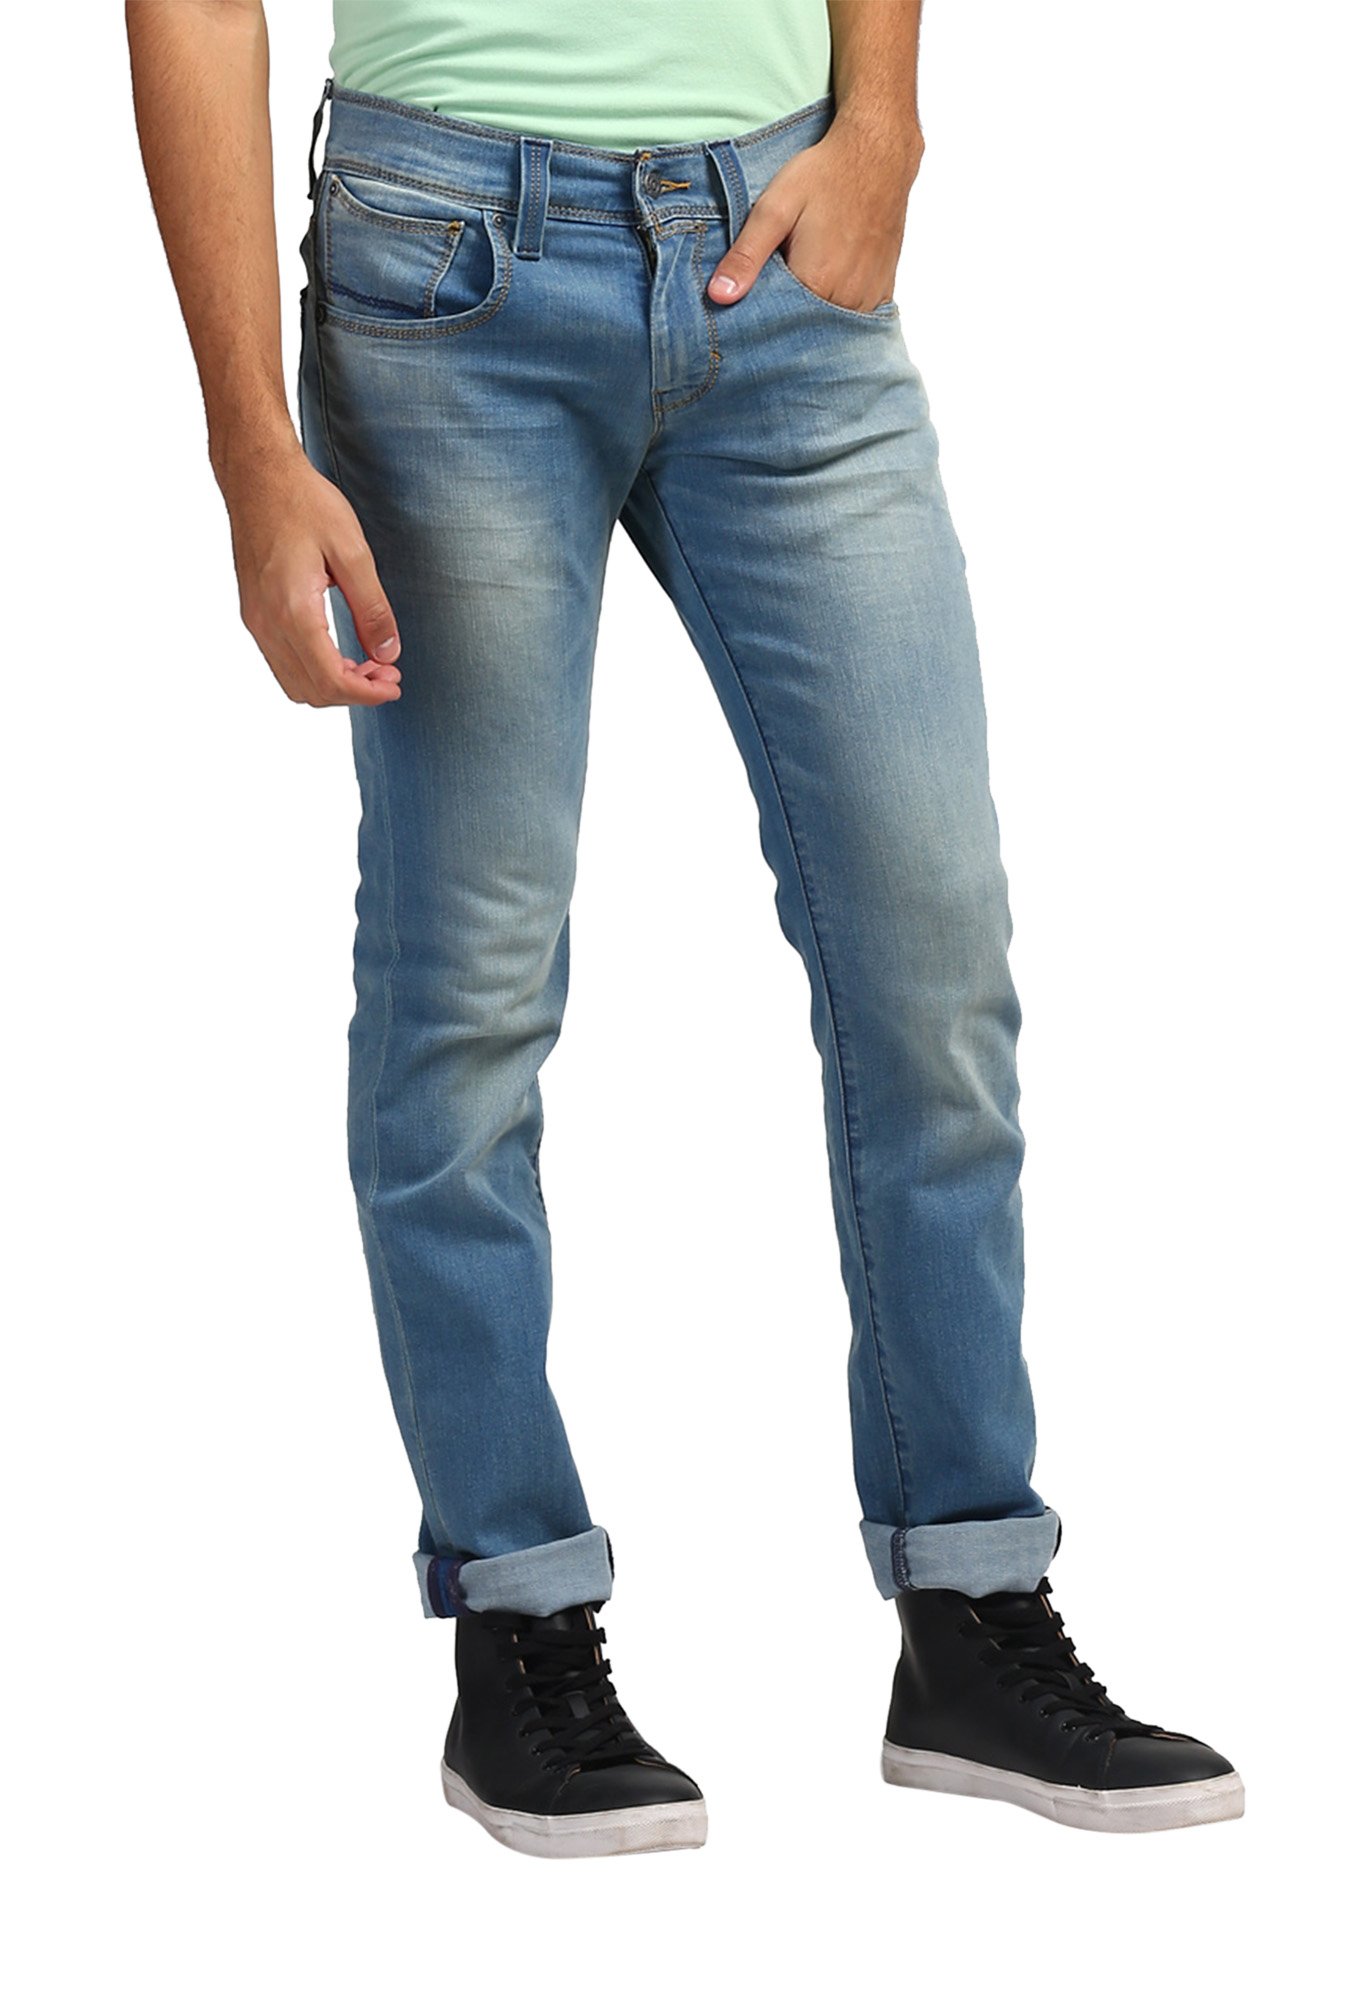 buy levis 511 jeans online